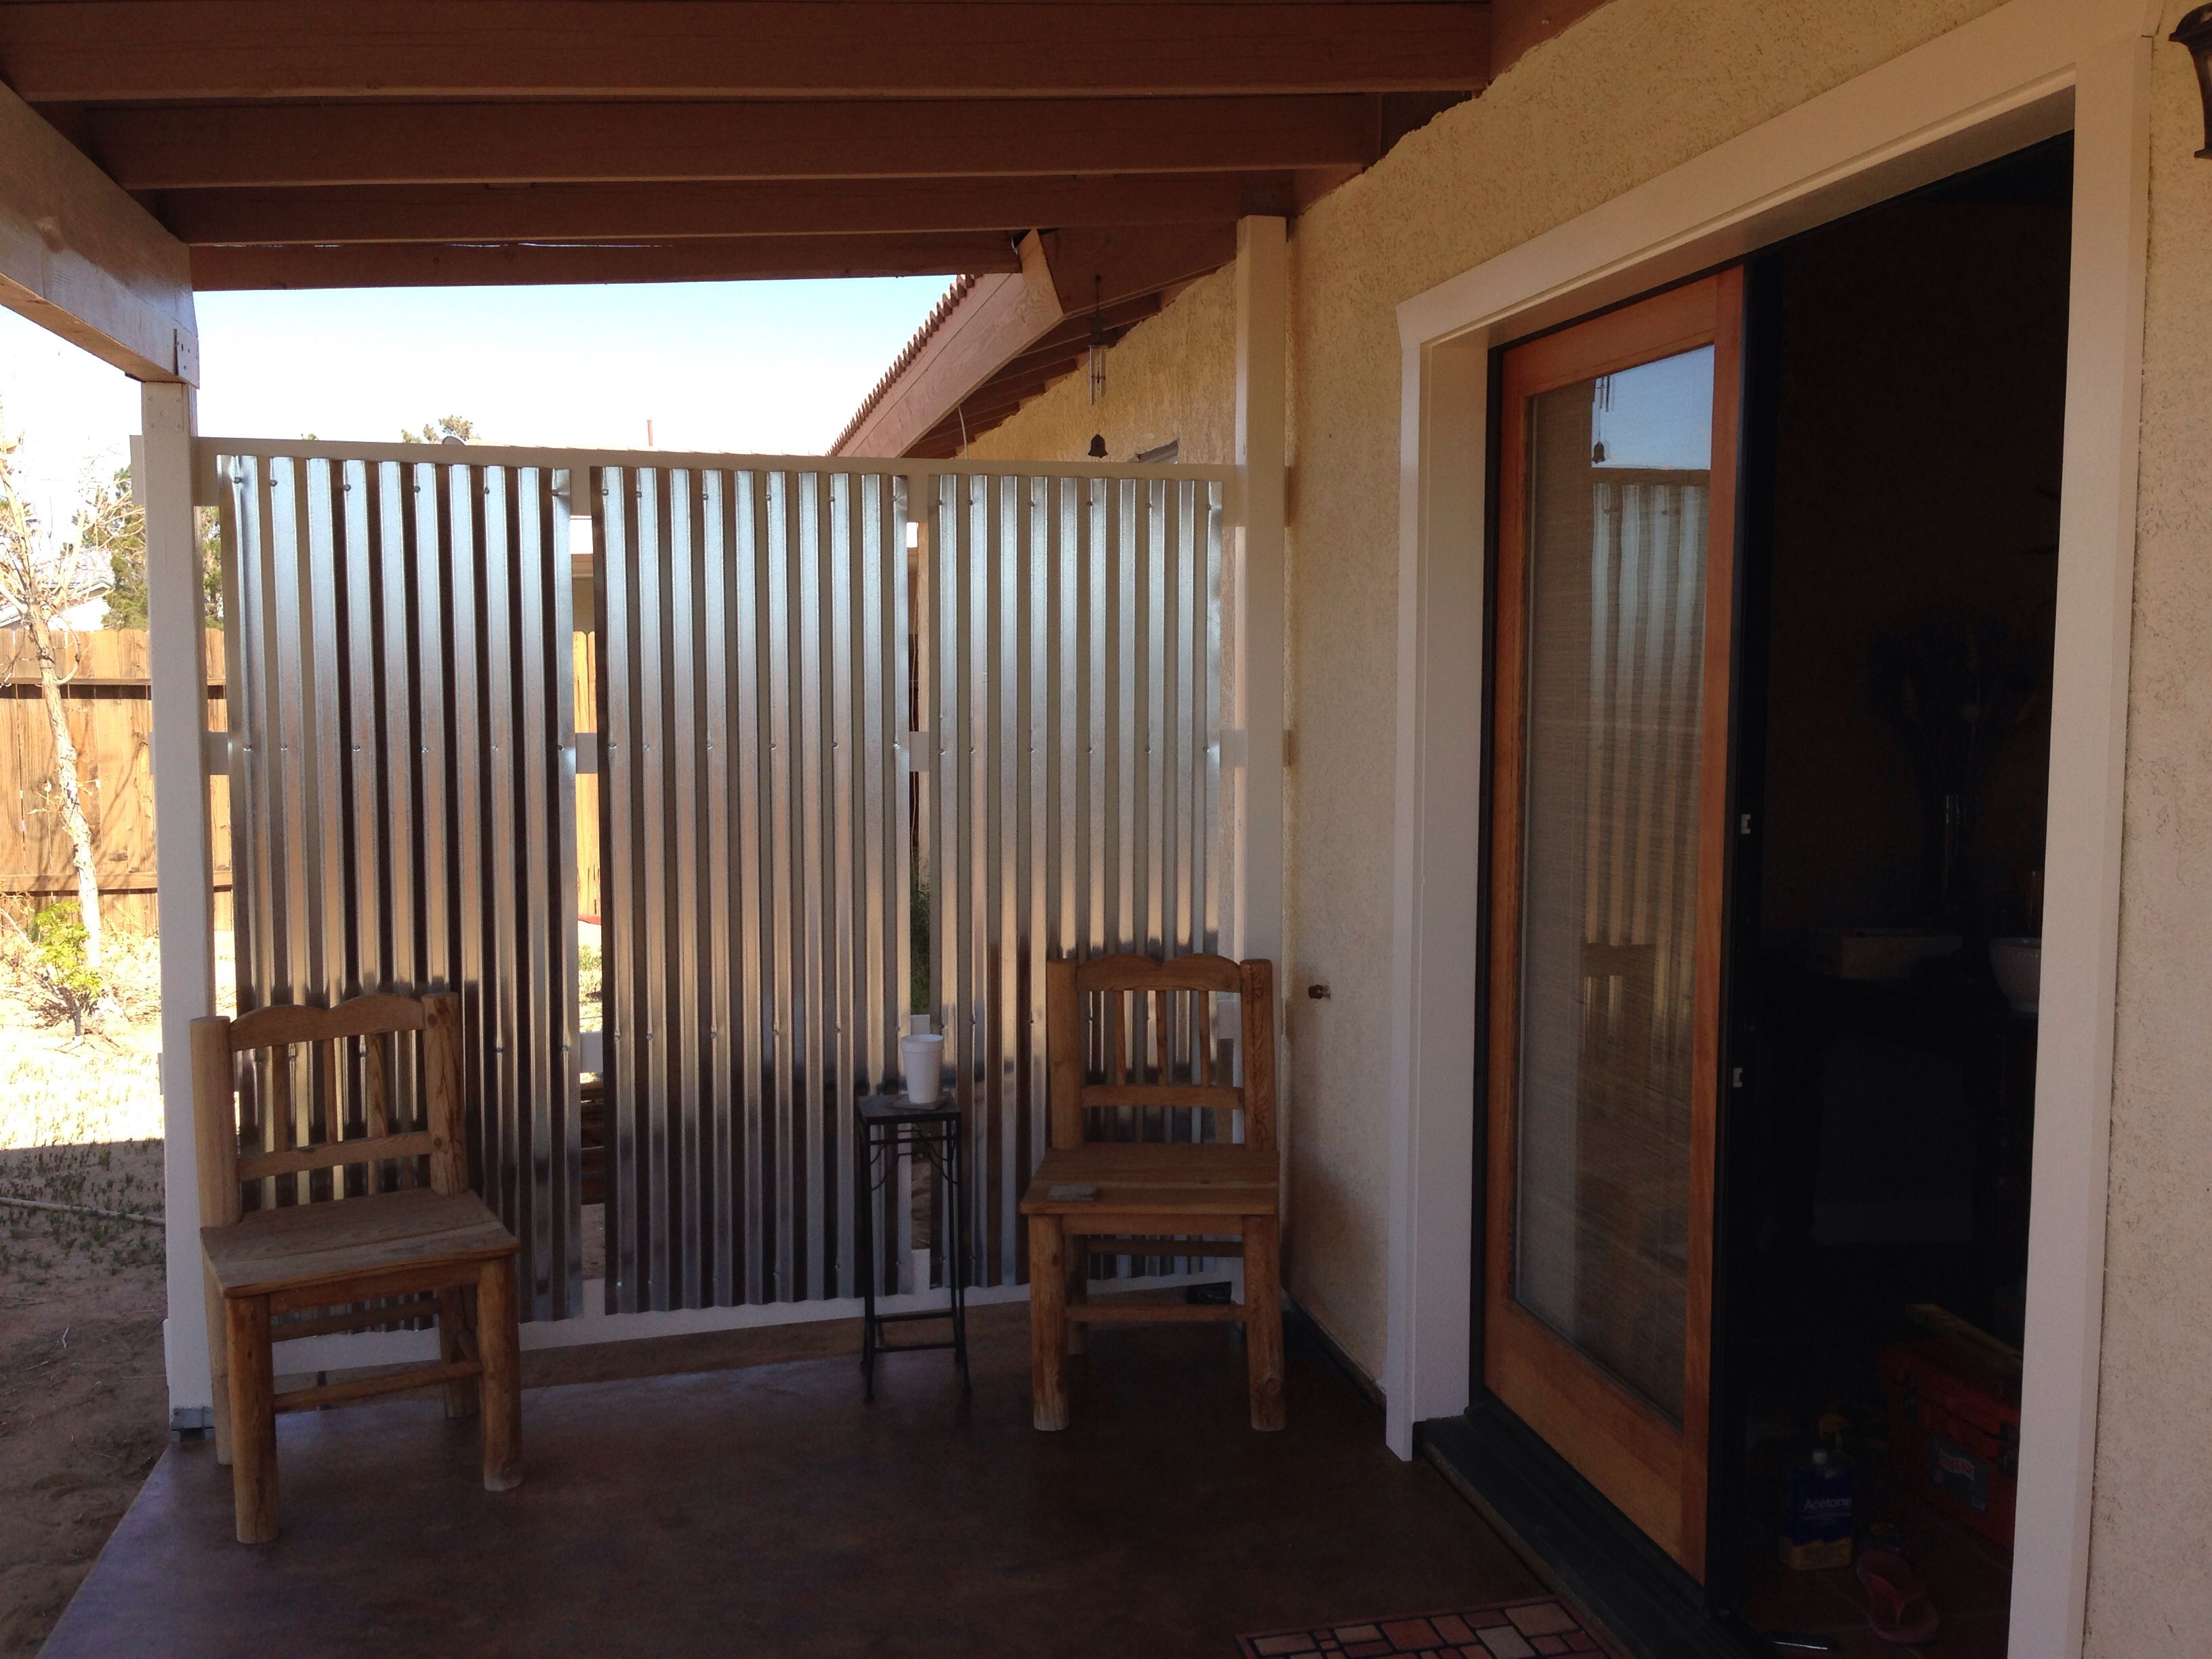 Diy Corrugated Privacy Screen And Wind Break Backyard Outdoor regarding dimensions 3264 X 2448